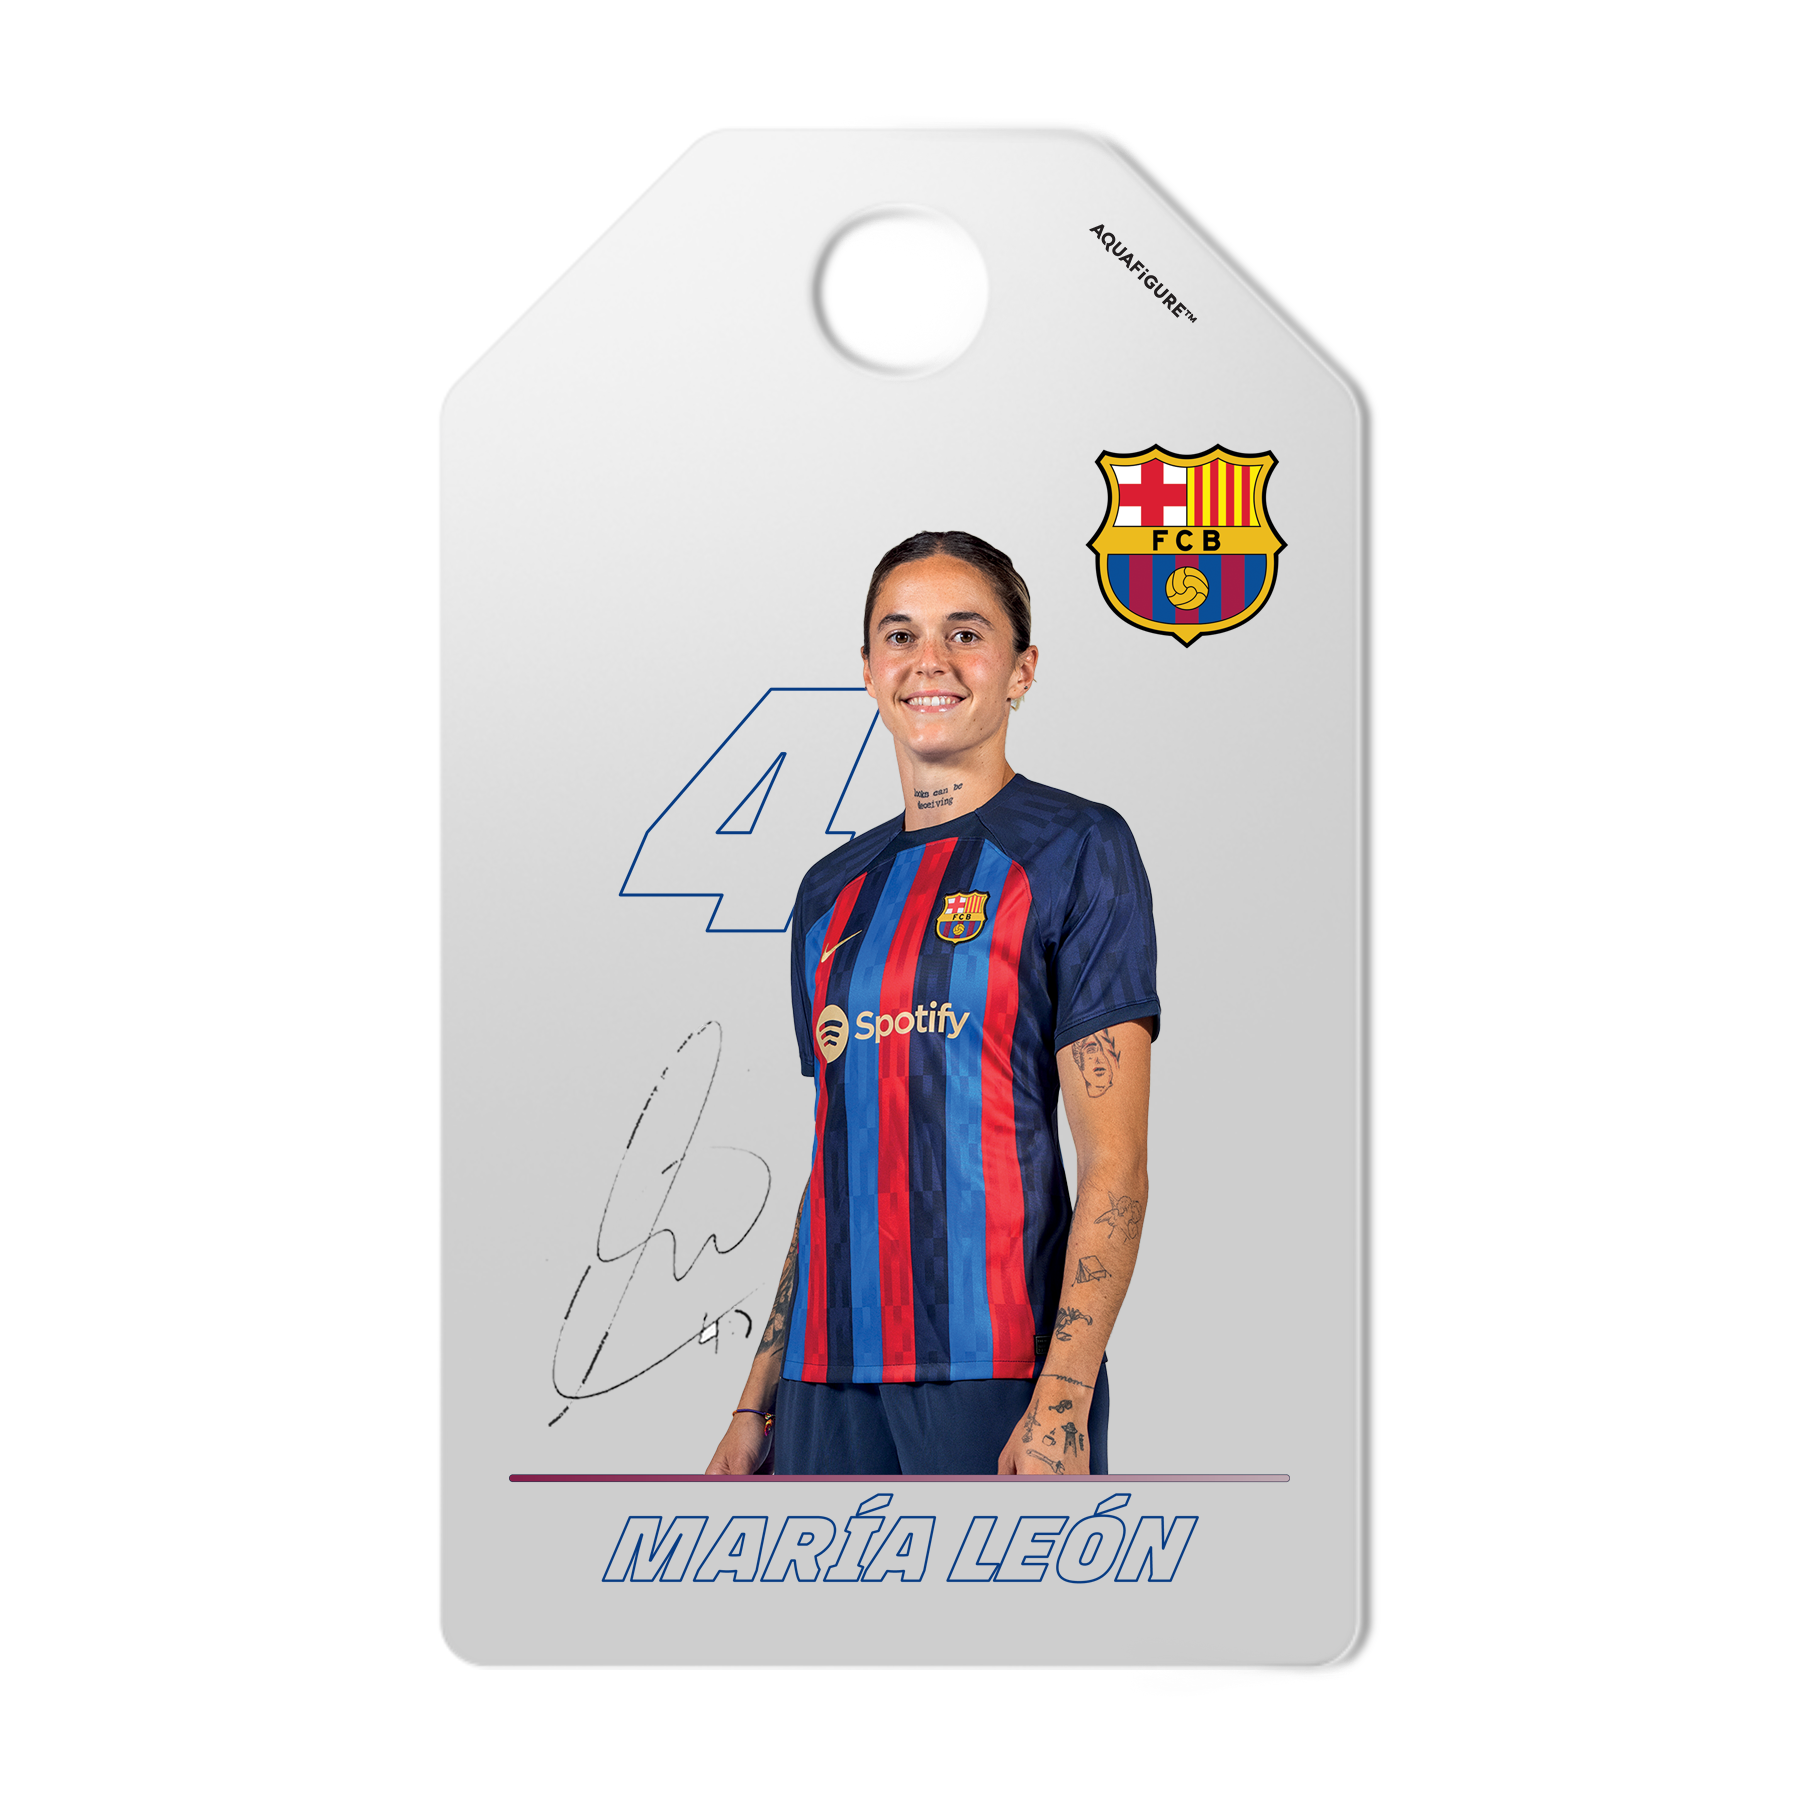 FC Barcelona Women’s Team - Aquafigure Bottle including 5 Players